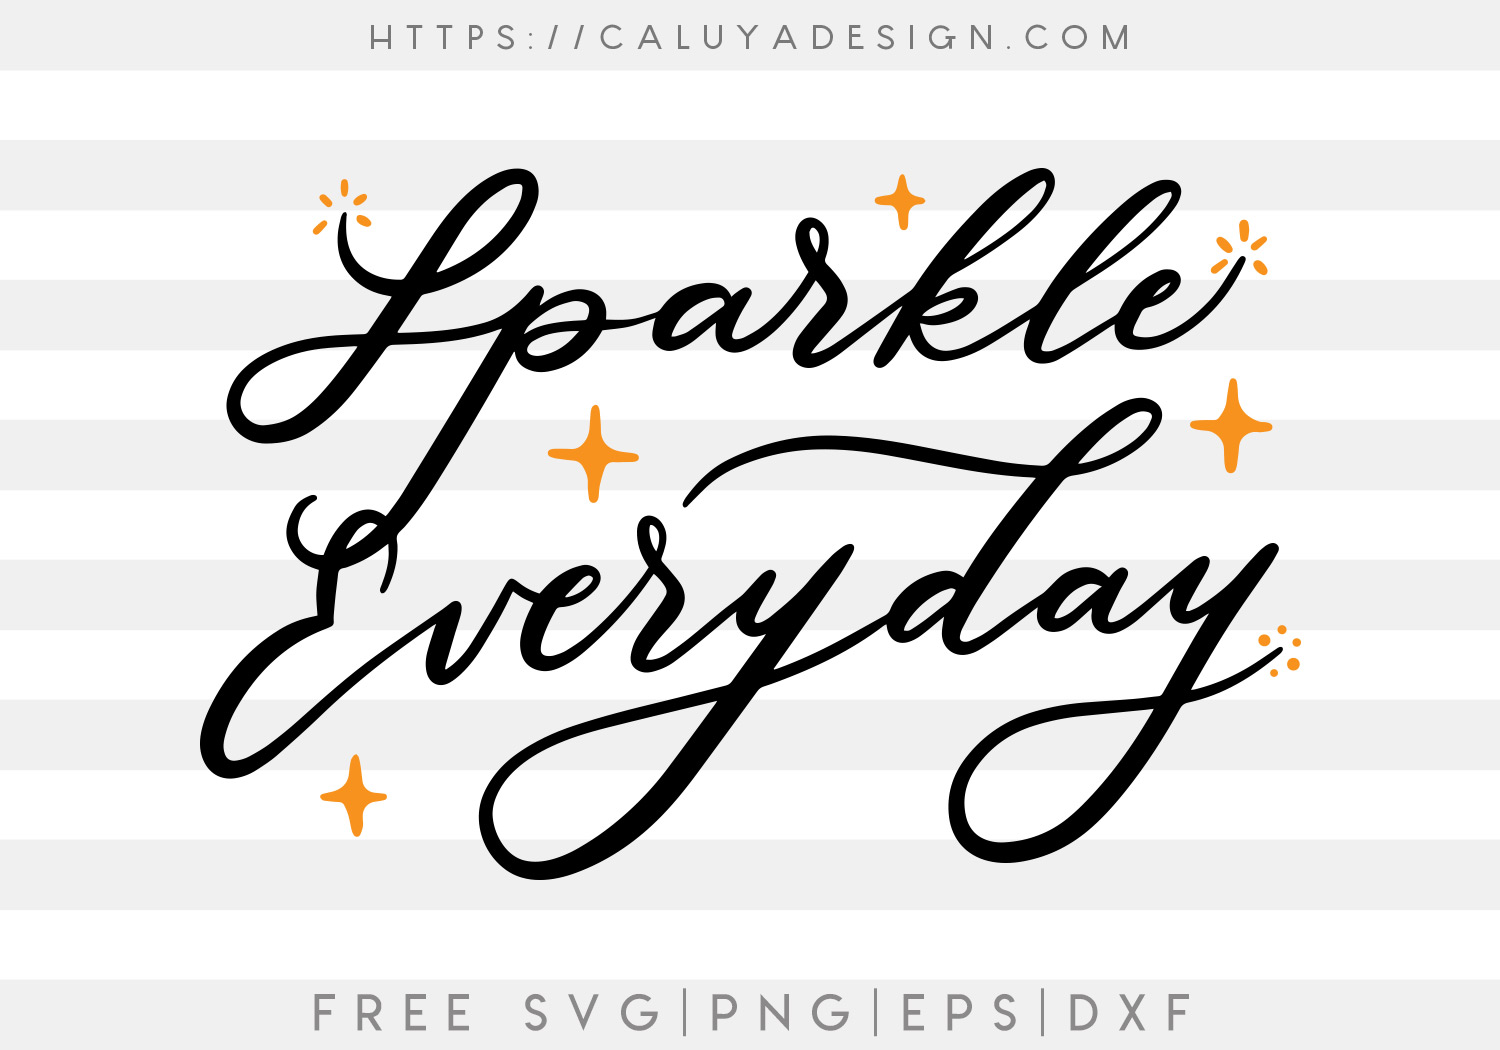 Free Sparkle Everyday SVG Cut File